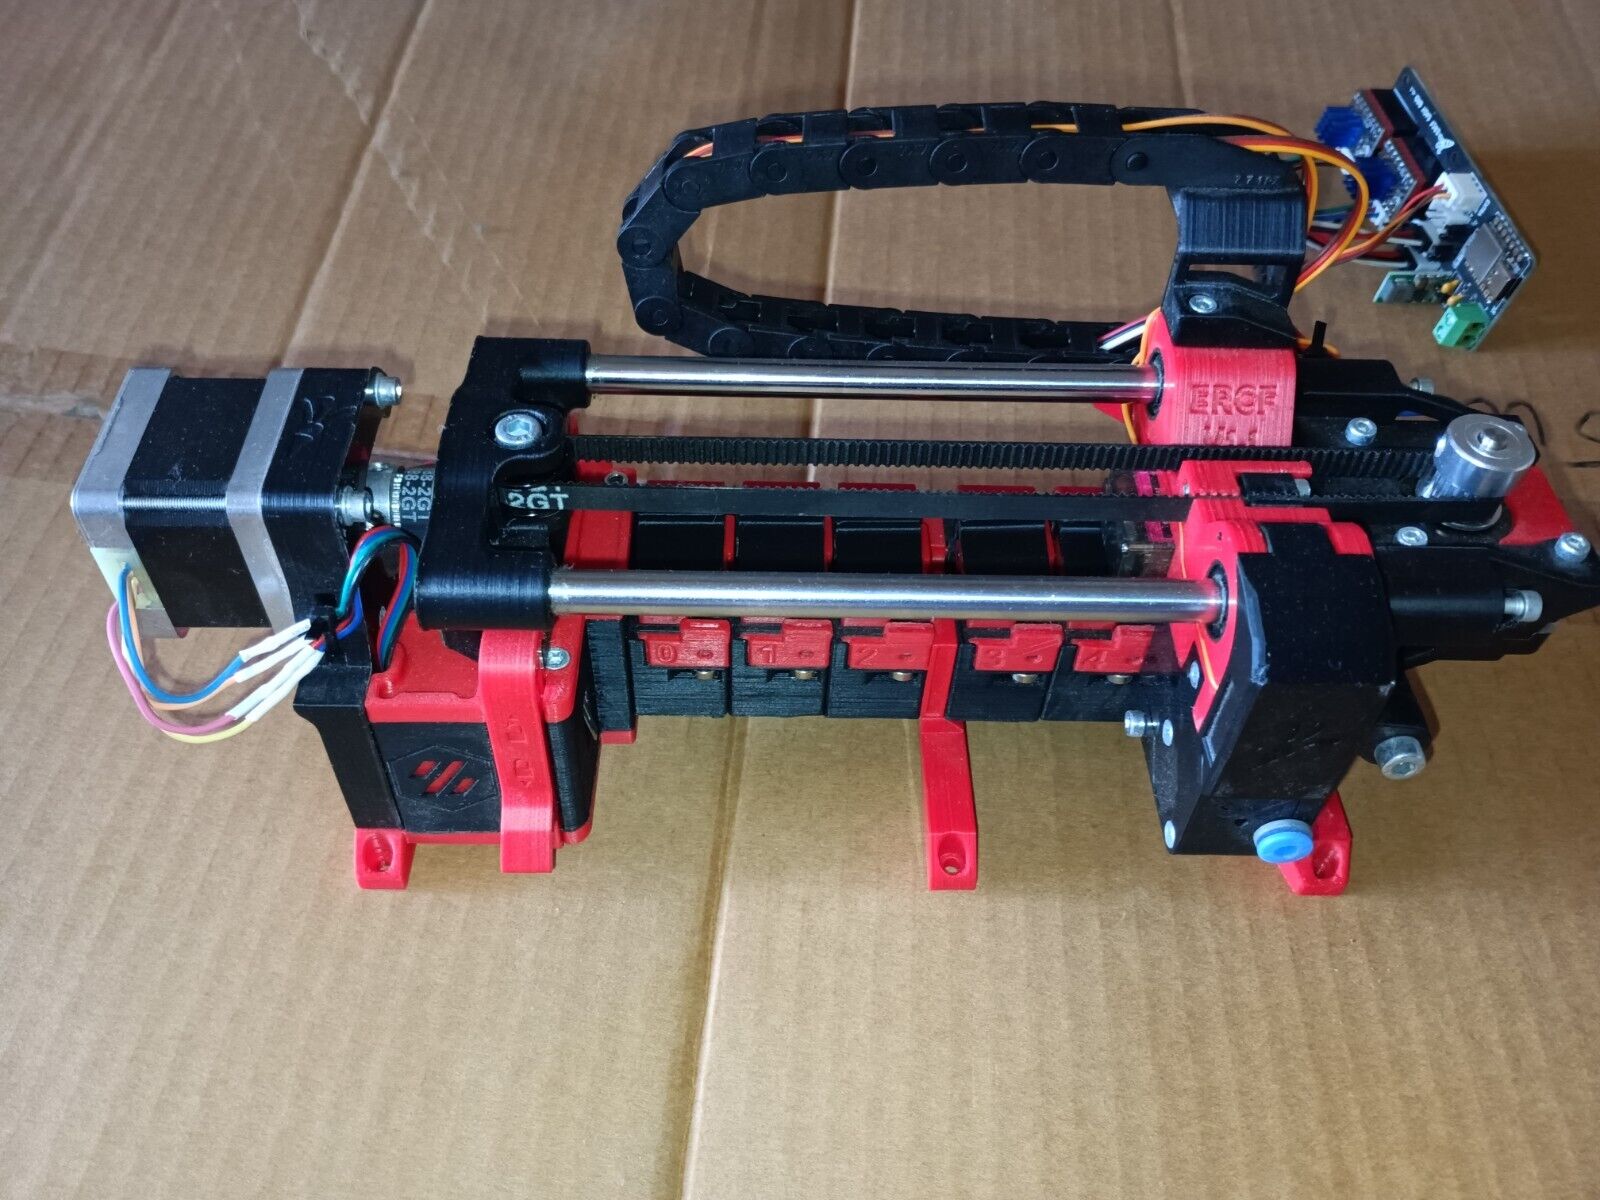 6-Color ERCF v1.1 MMU with EasyBRD1.1  for Voron 3D printer assembled and tested